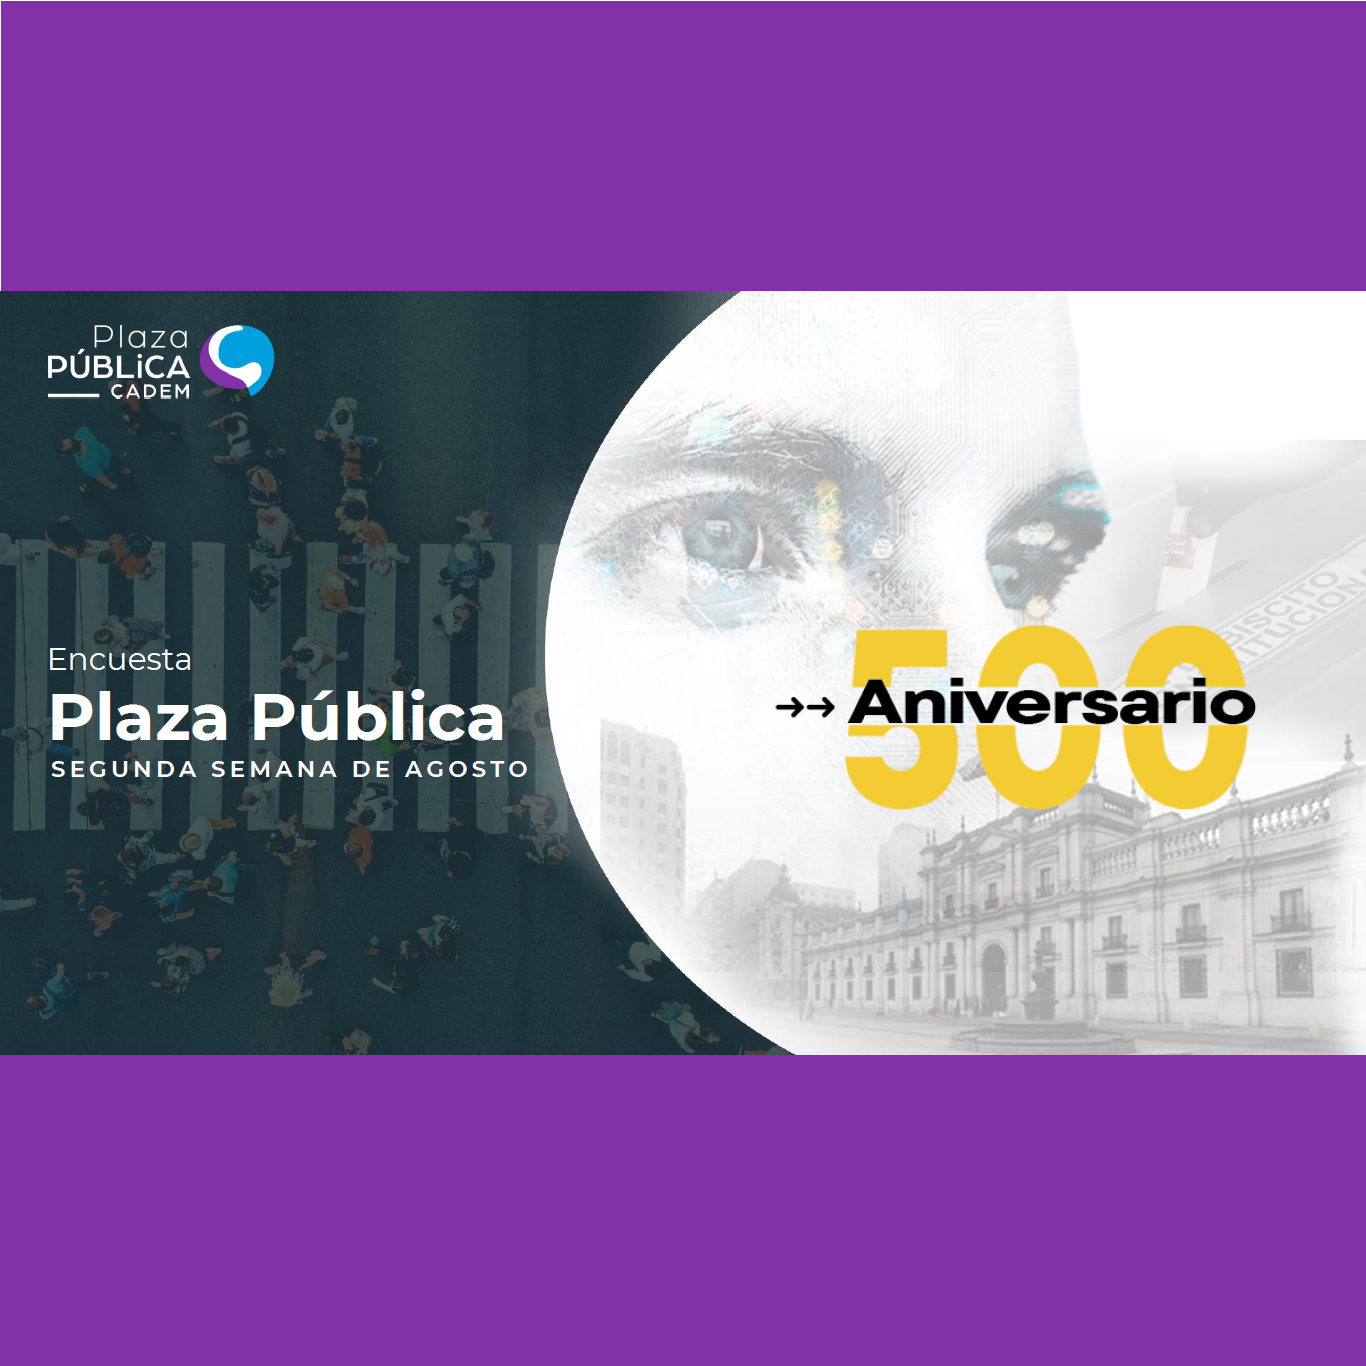 Estudio: Encuesta Plaza Pública – 2da semana de agosto